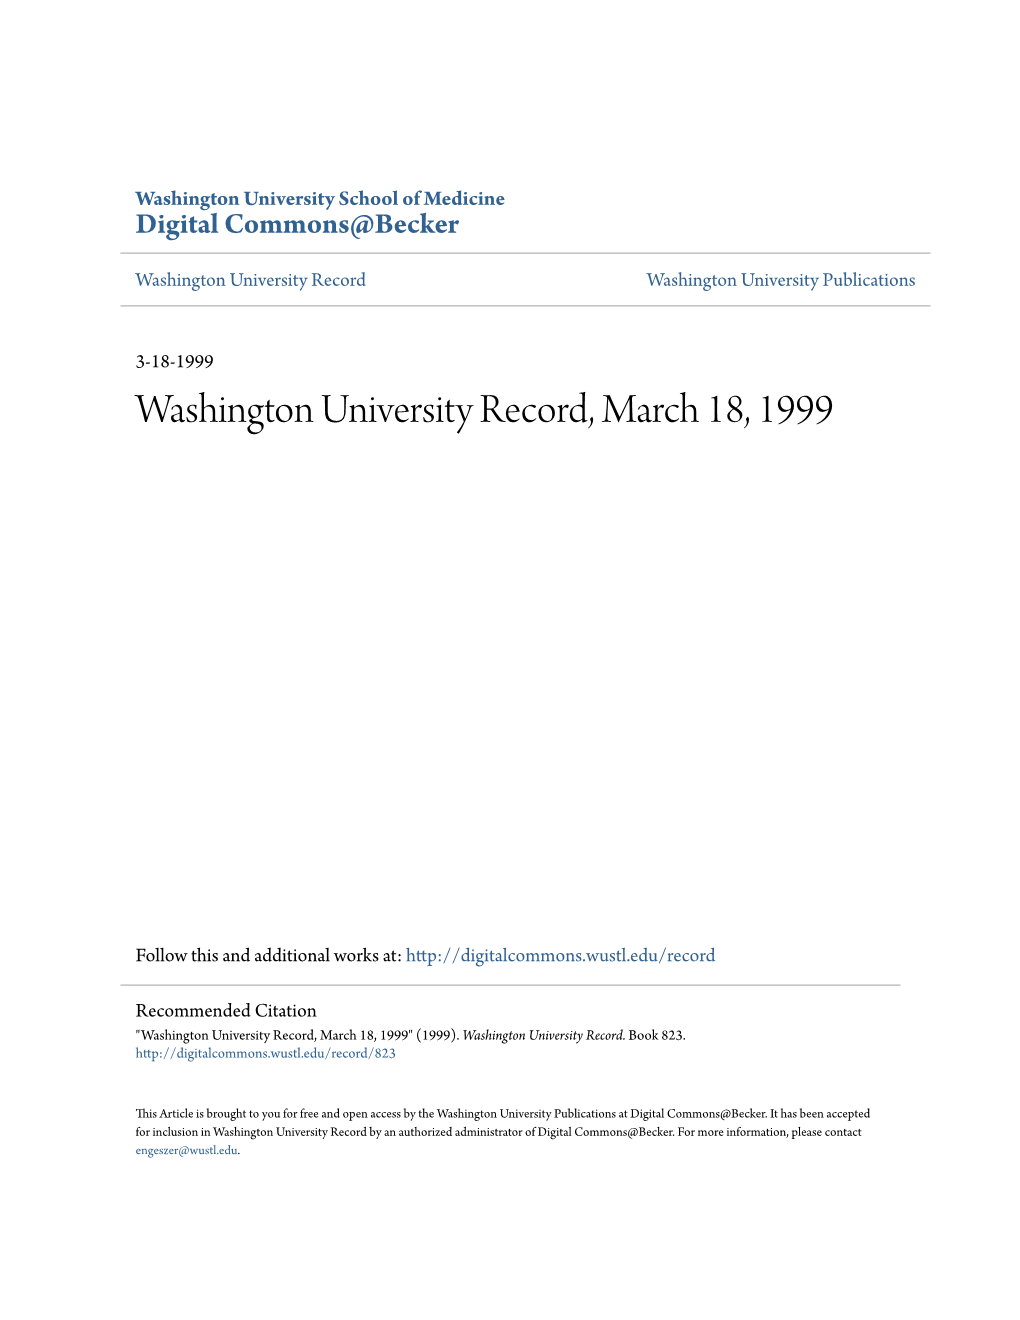 Washington University Record, March 18, 1999